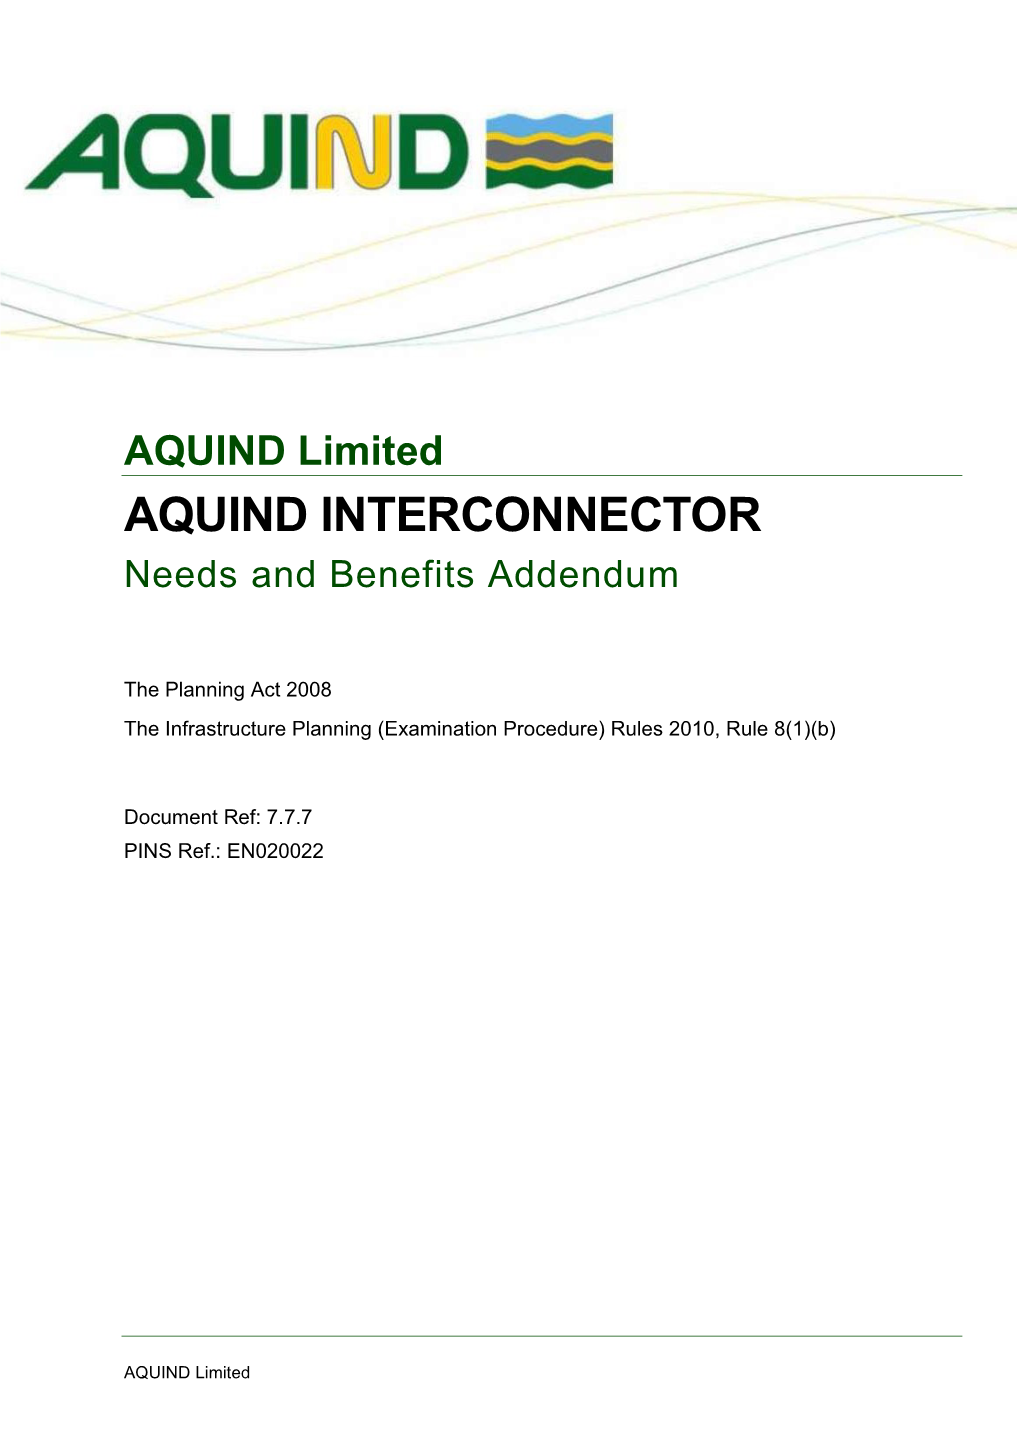 AQUIND INTERCONNECTOR Needs and Benefits Addendum